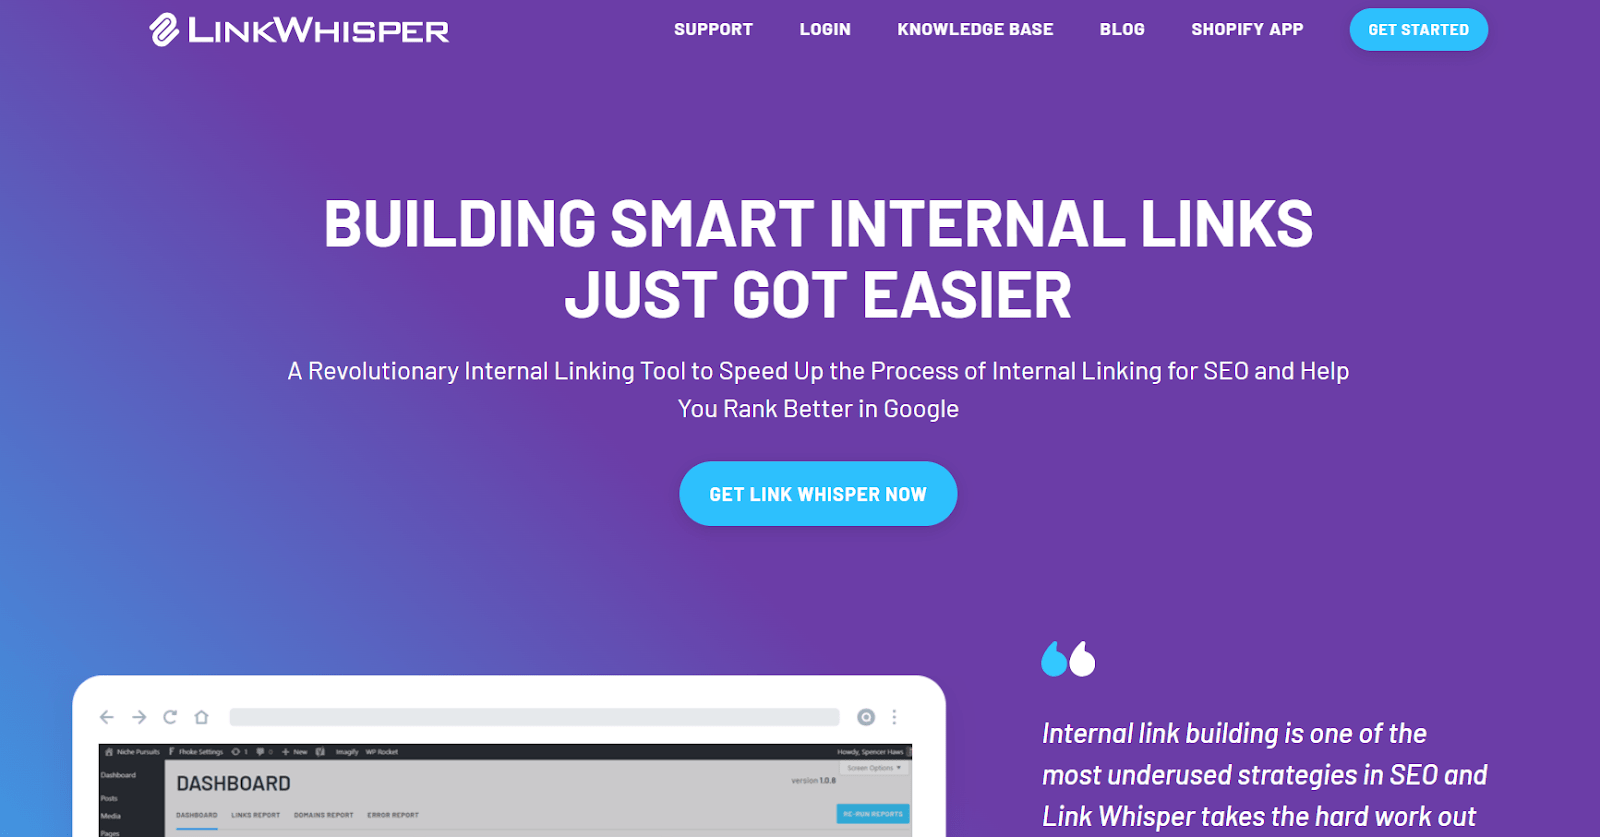 link whisper website - building smart internal links just got easier